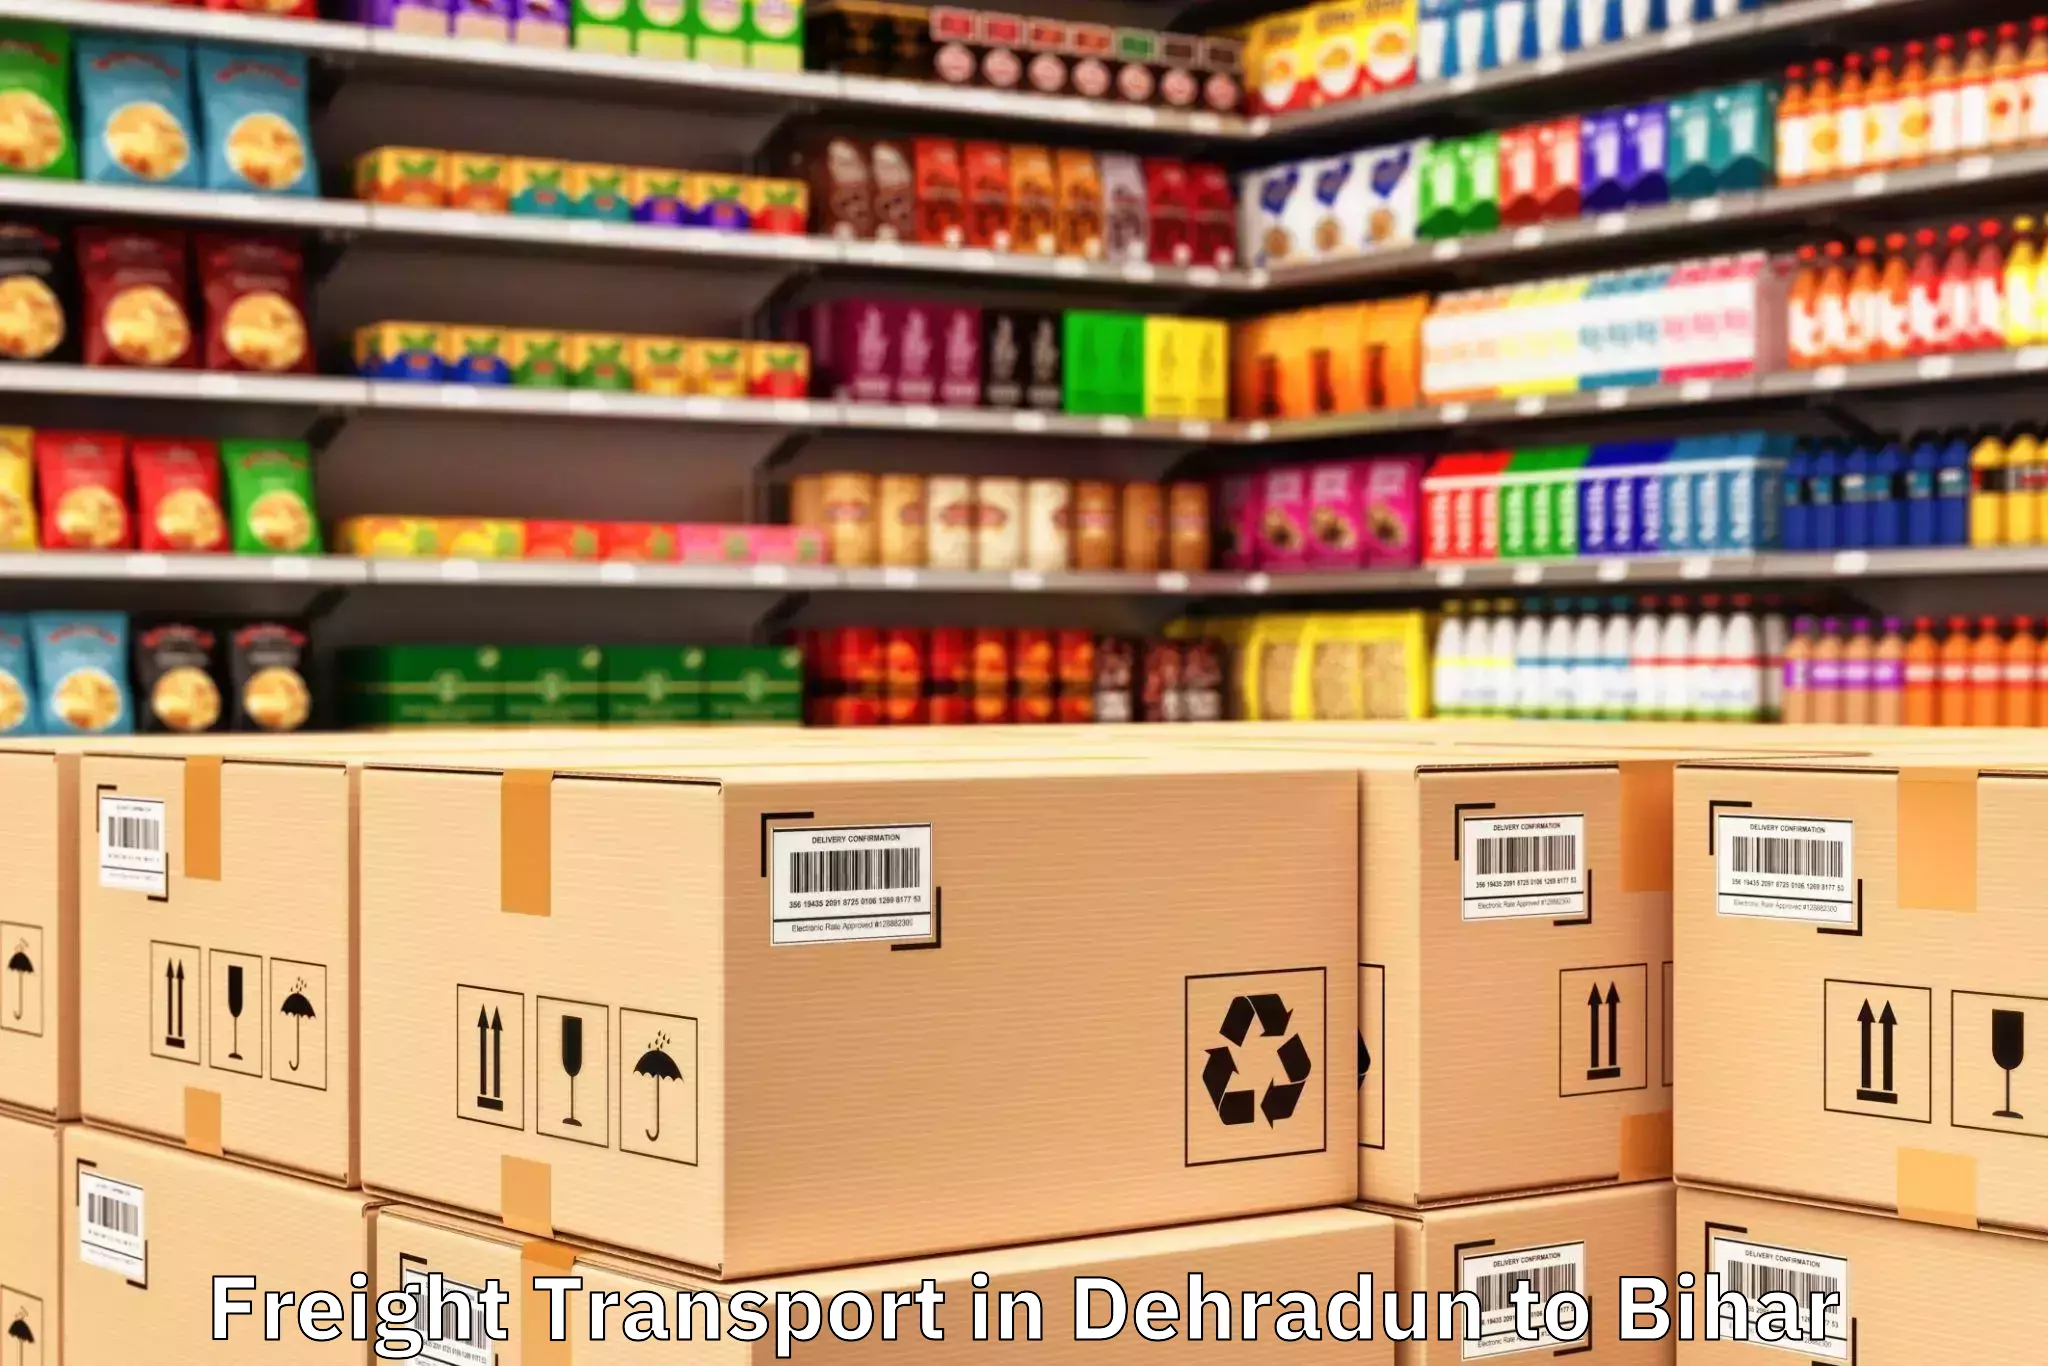 Professional Dehradun to Bihar Freight Transport